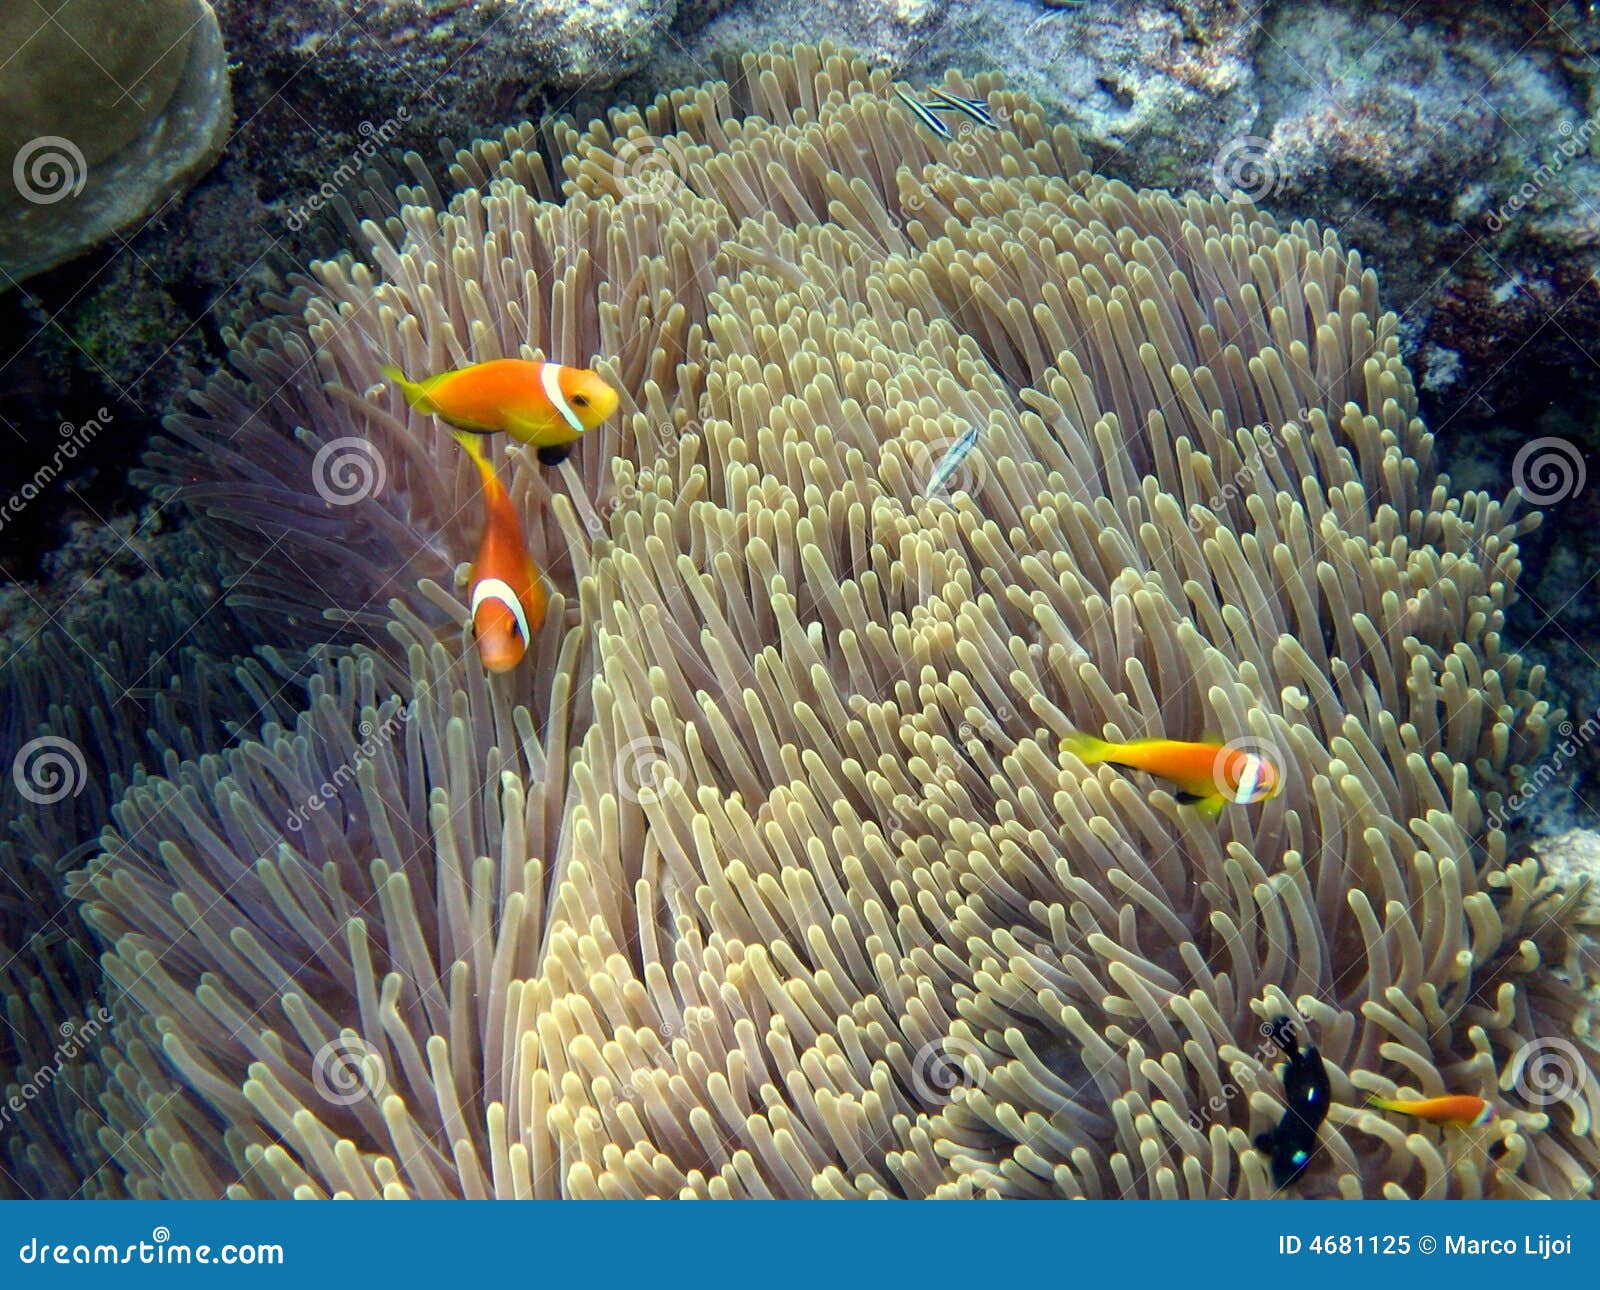 common maldive anemonefish